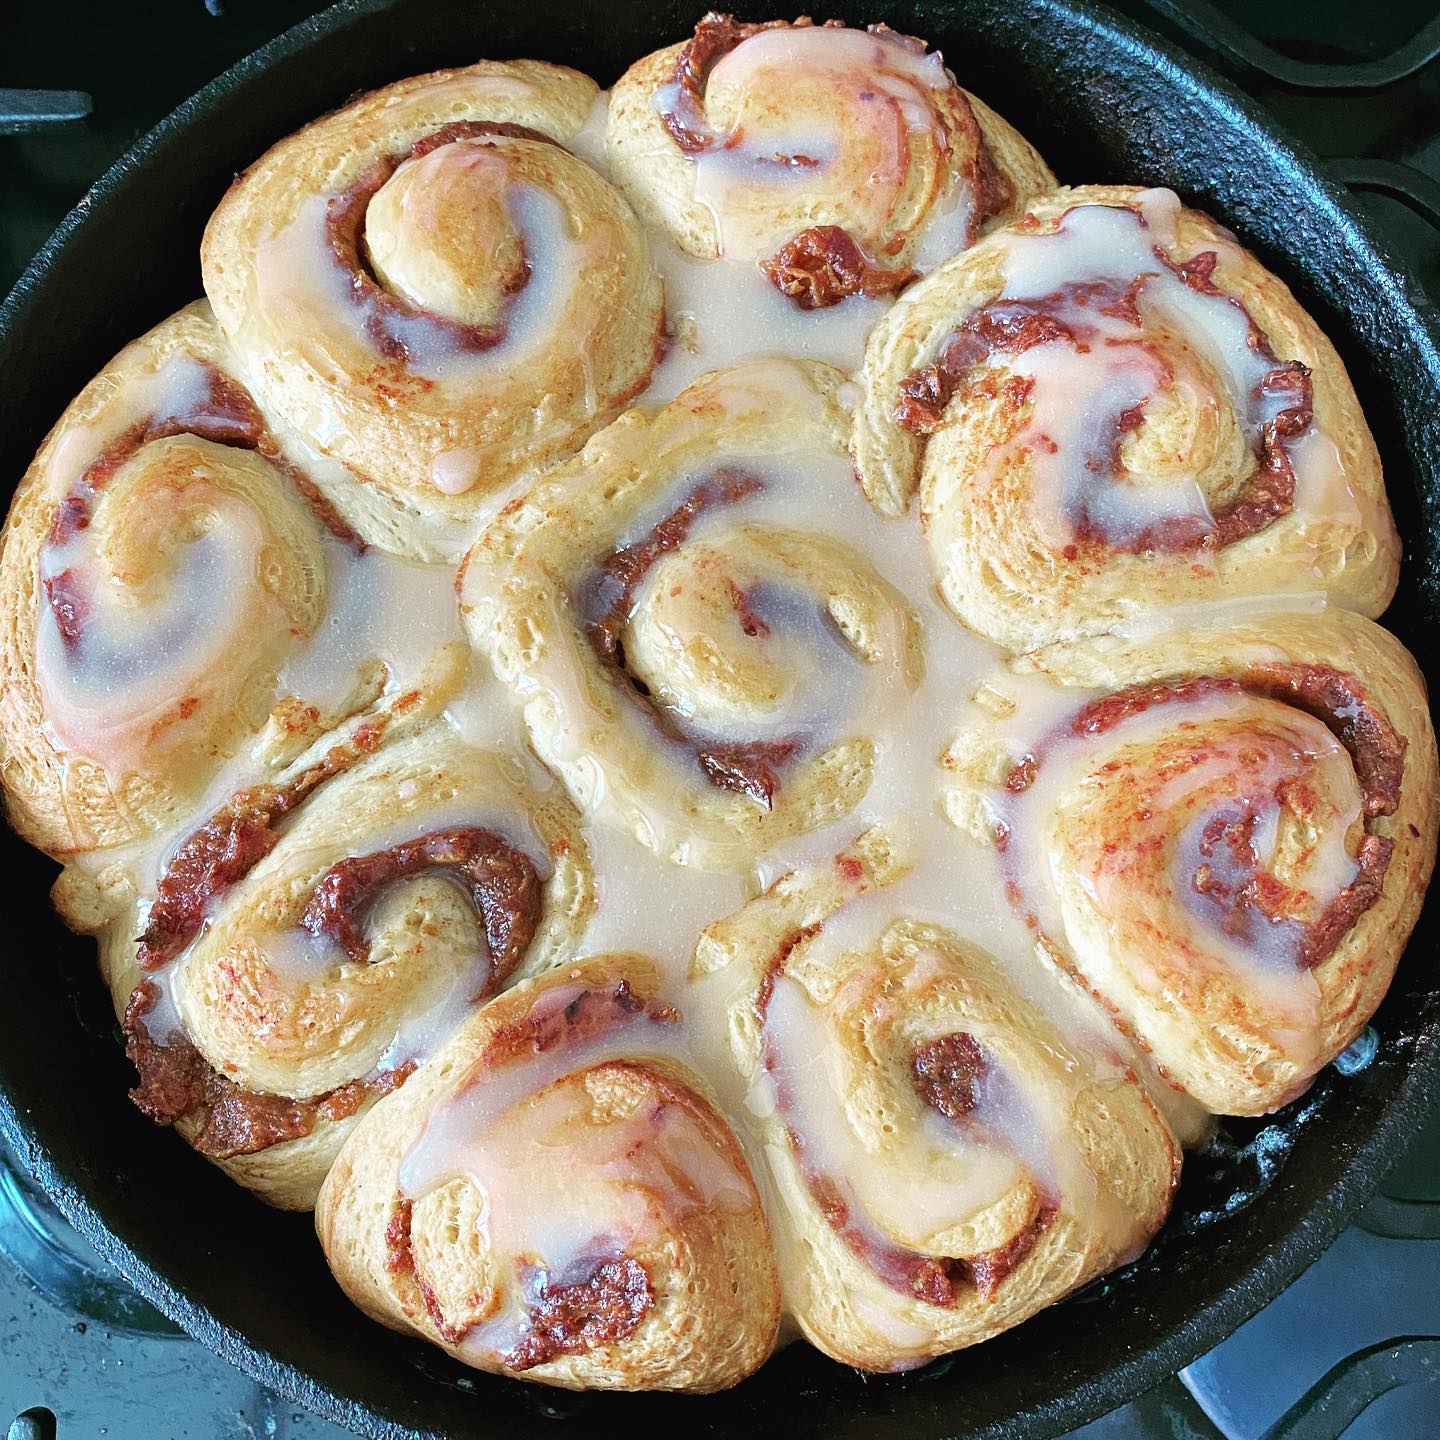 Cinnamon buns always help 🥧 @bonappetitmag